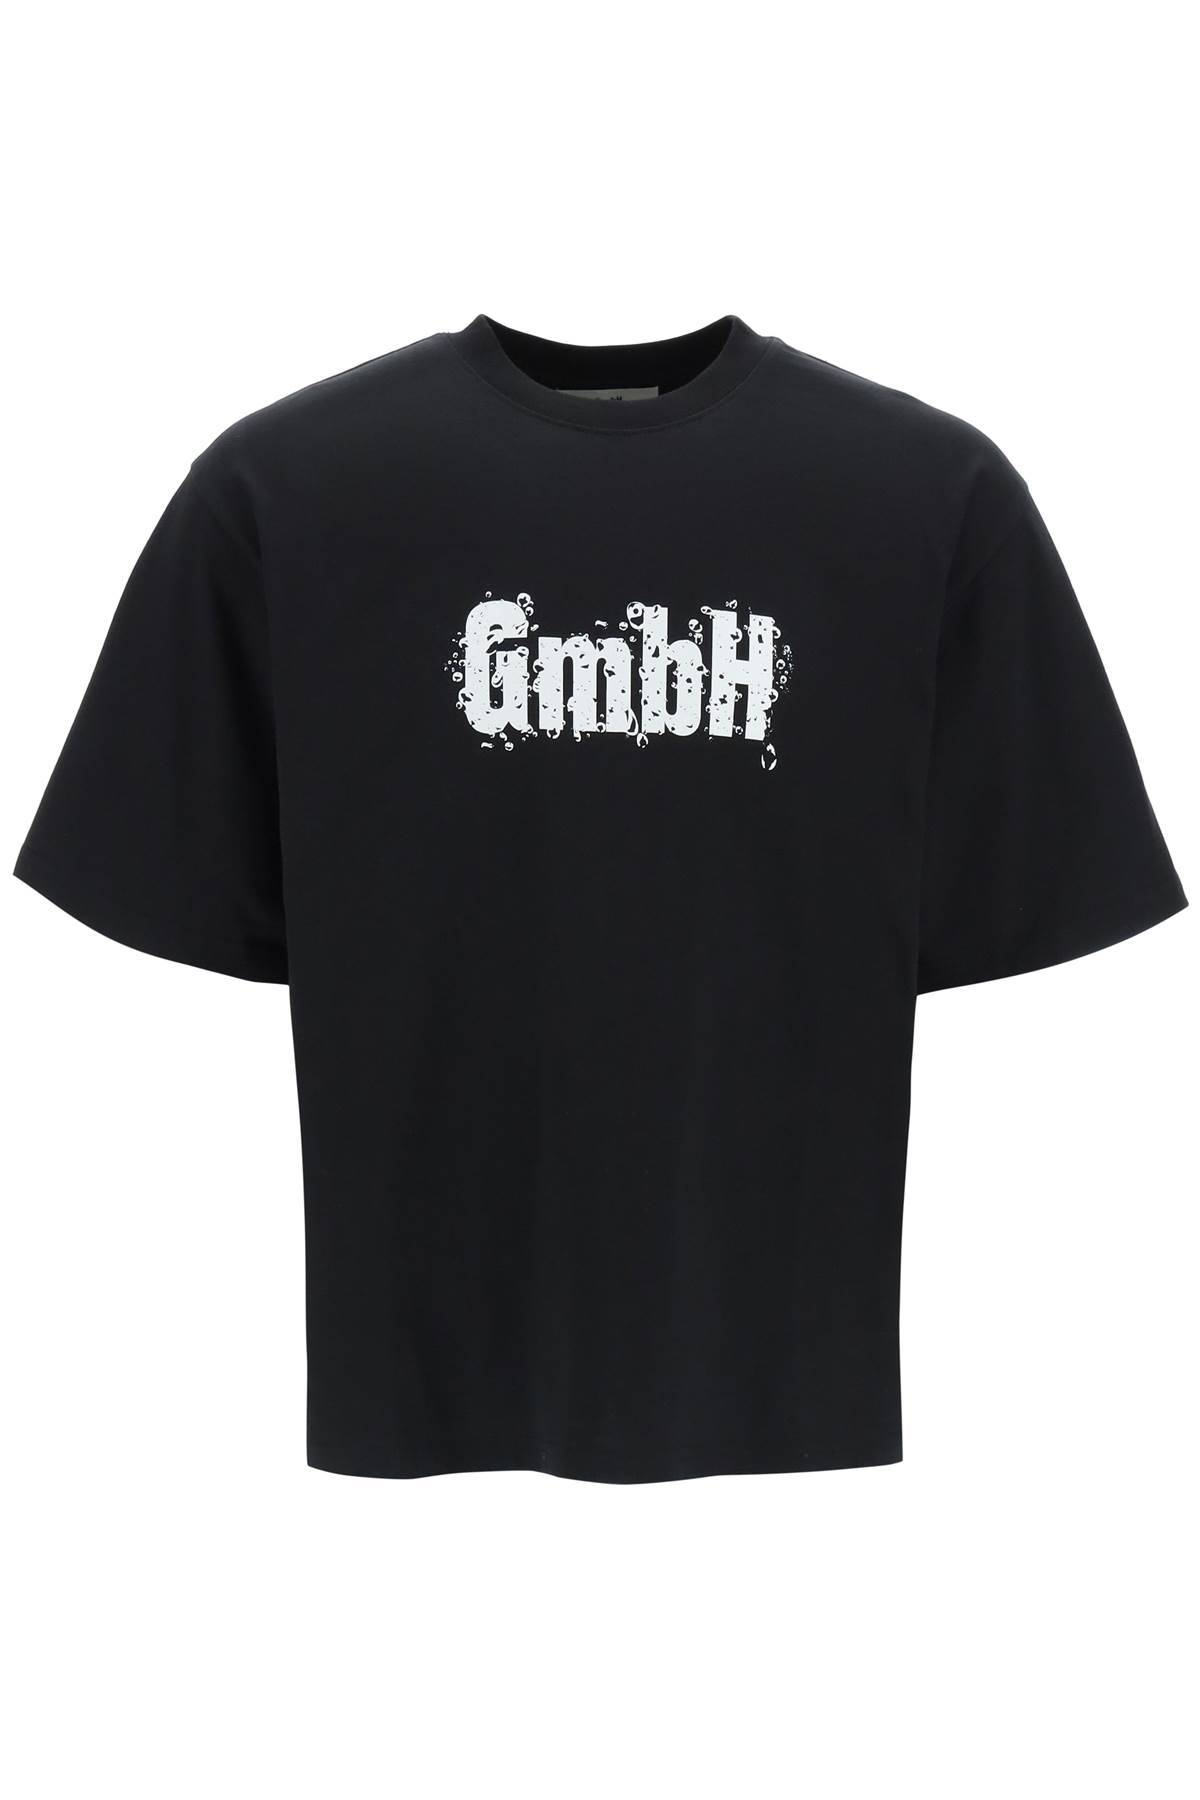 GMBH GMBH screen printed logo t-shirt